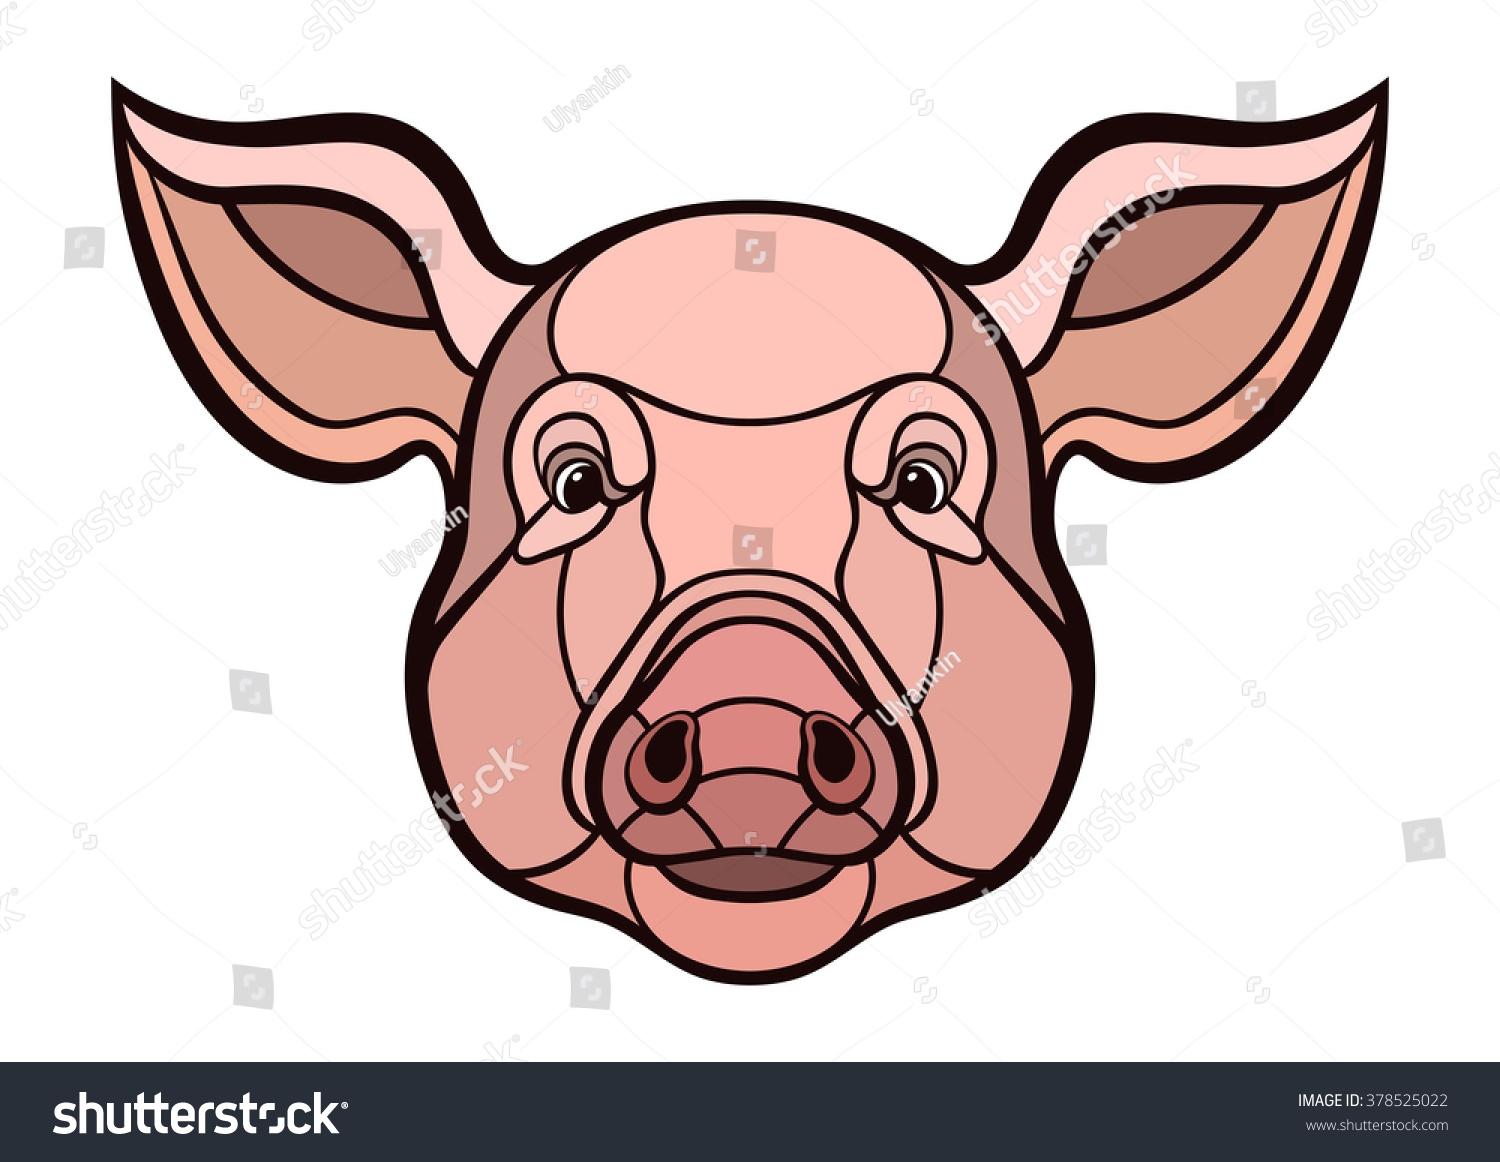 pig ears clipart - photo #46